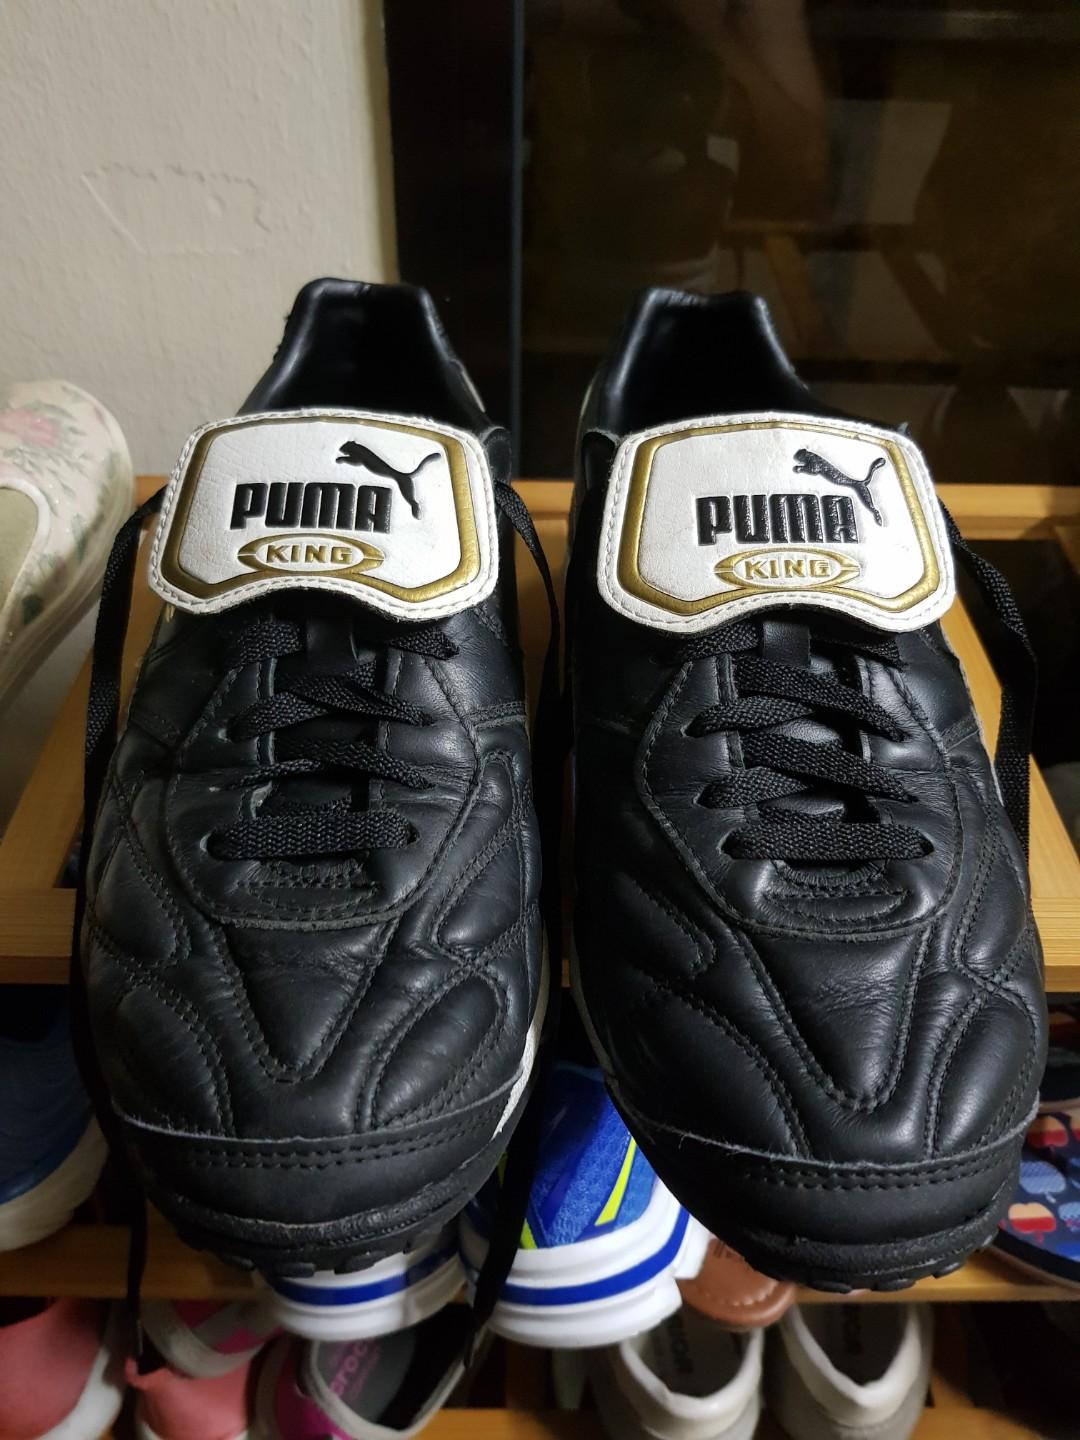 puma king soccer shoes